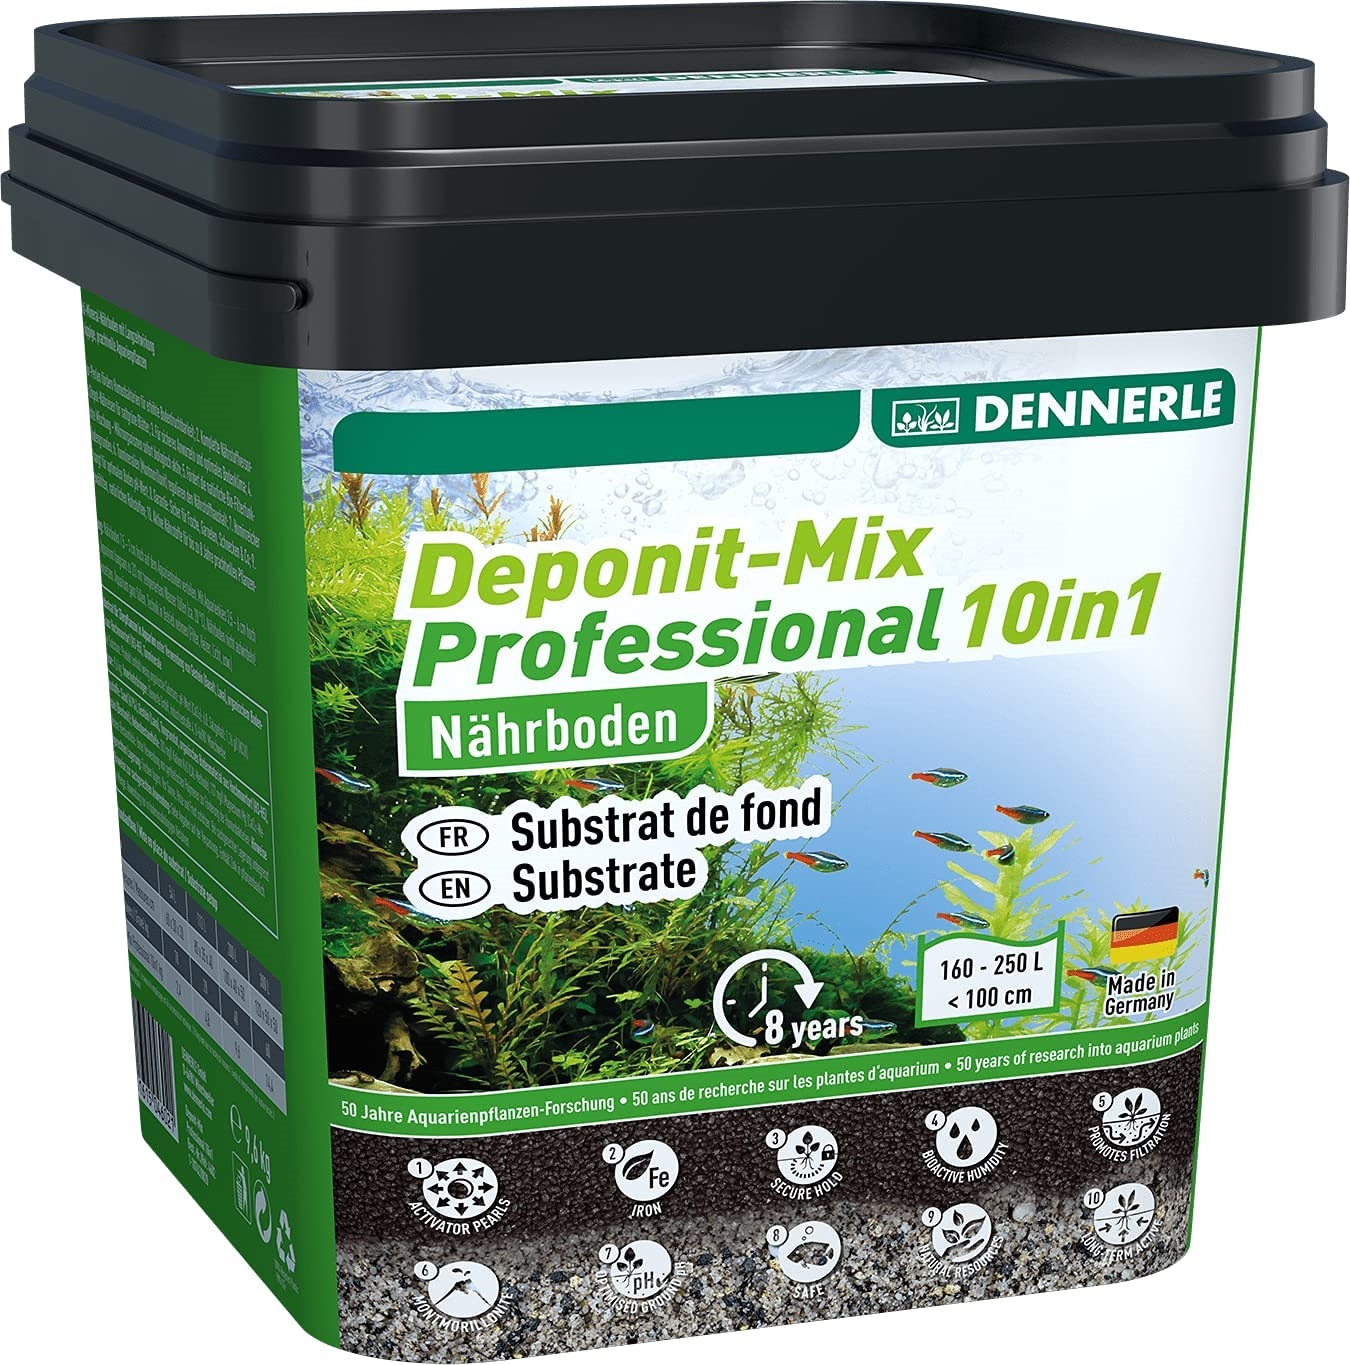 DENNERLE Výživový substrát Deponit-Mix Professional 10in1, 9,6kg